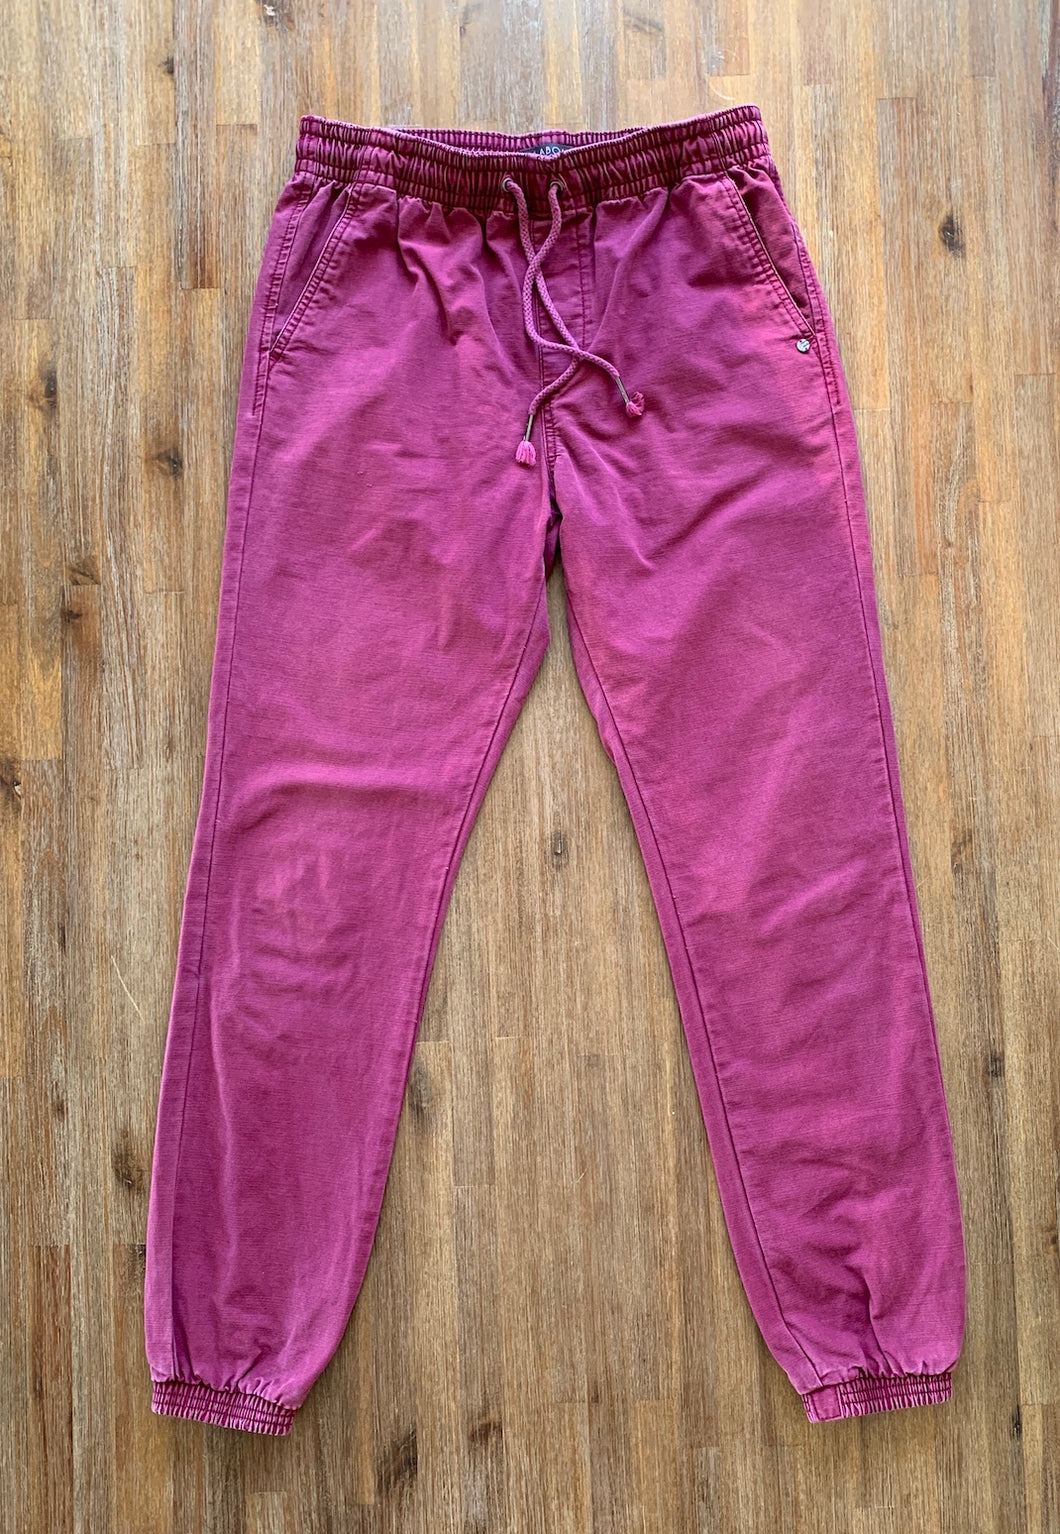 BILLABONG Size 8 Cuffed Pants in a Retro Marone DEC129